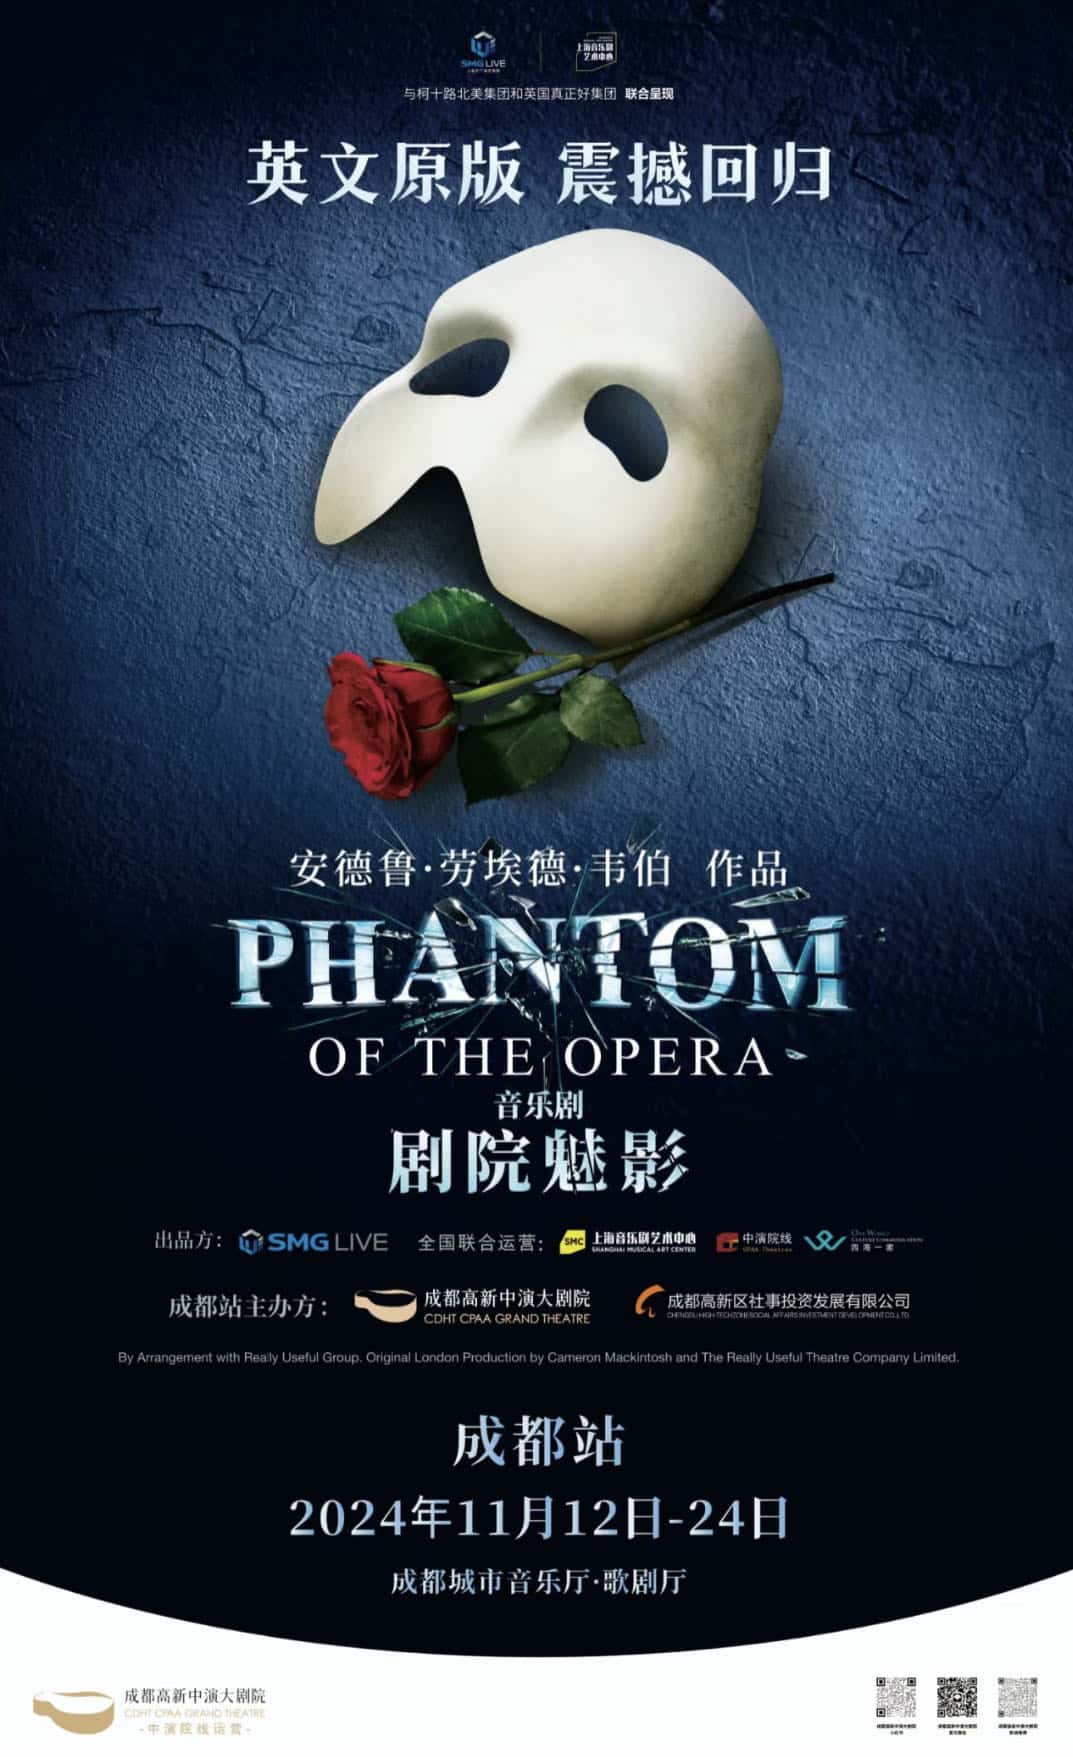 Phantom of the opera chengdu image